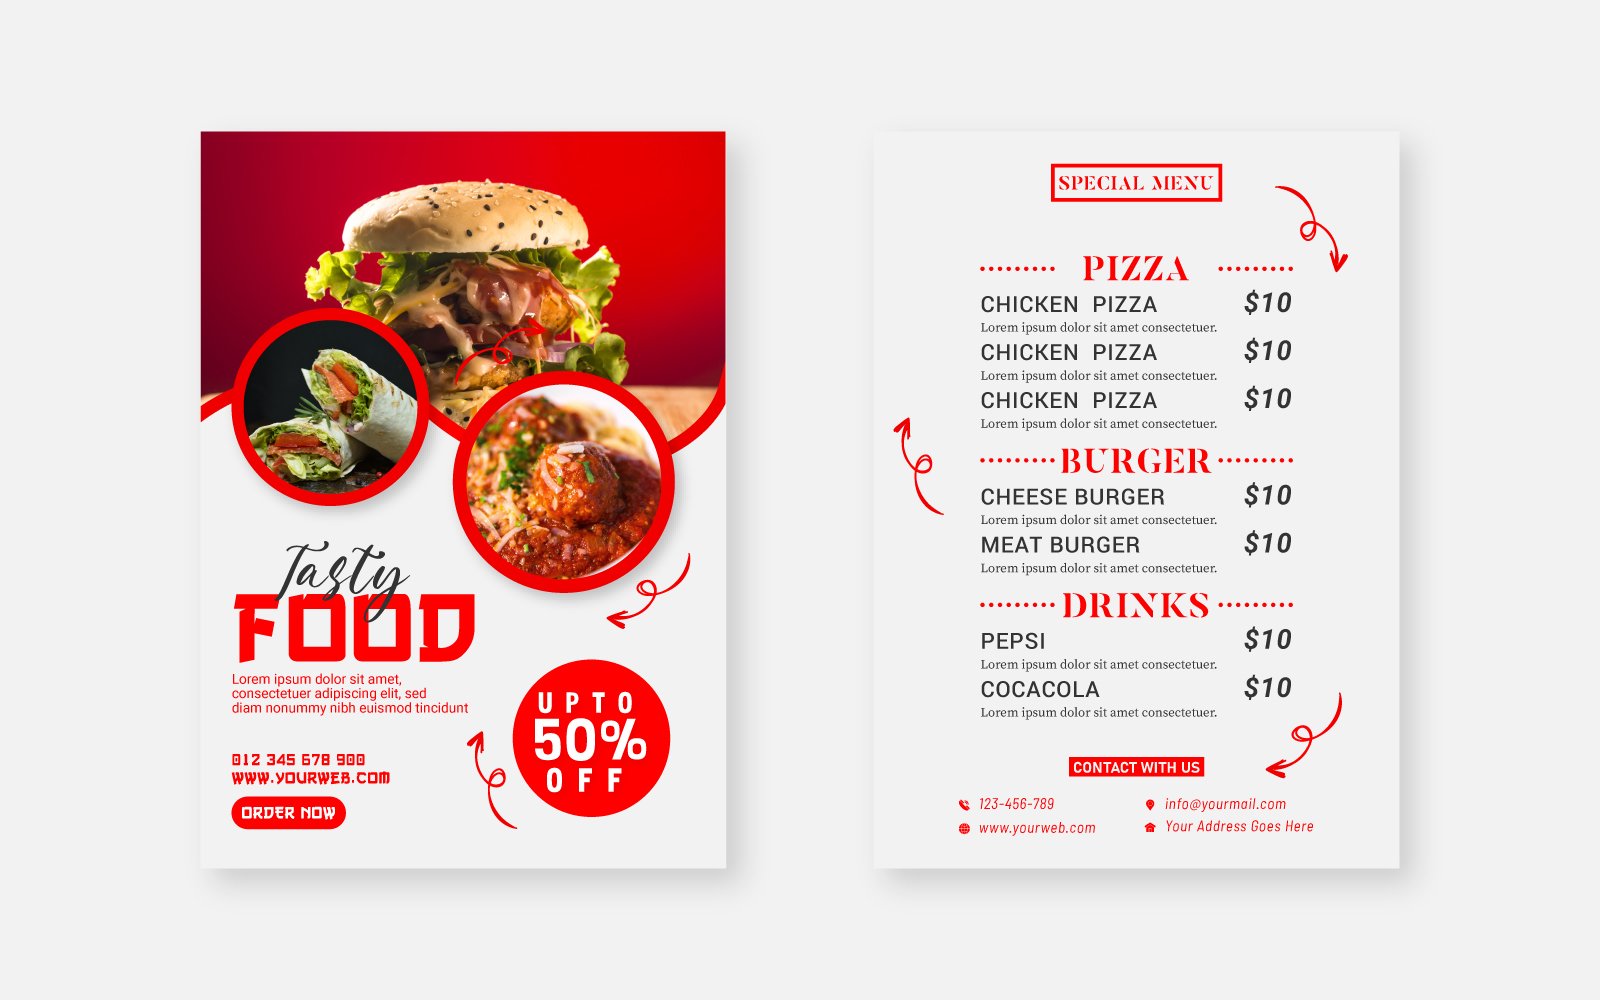 Restuarant's Fast Food Flyer Print-Ready Design Templates